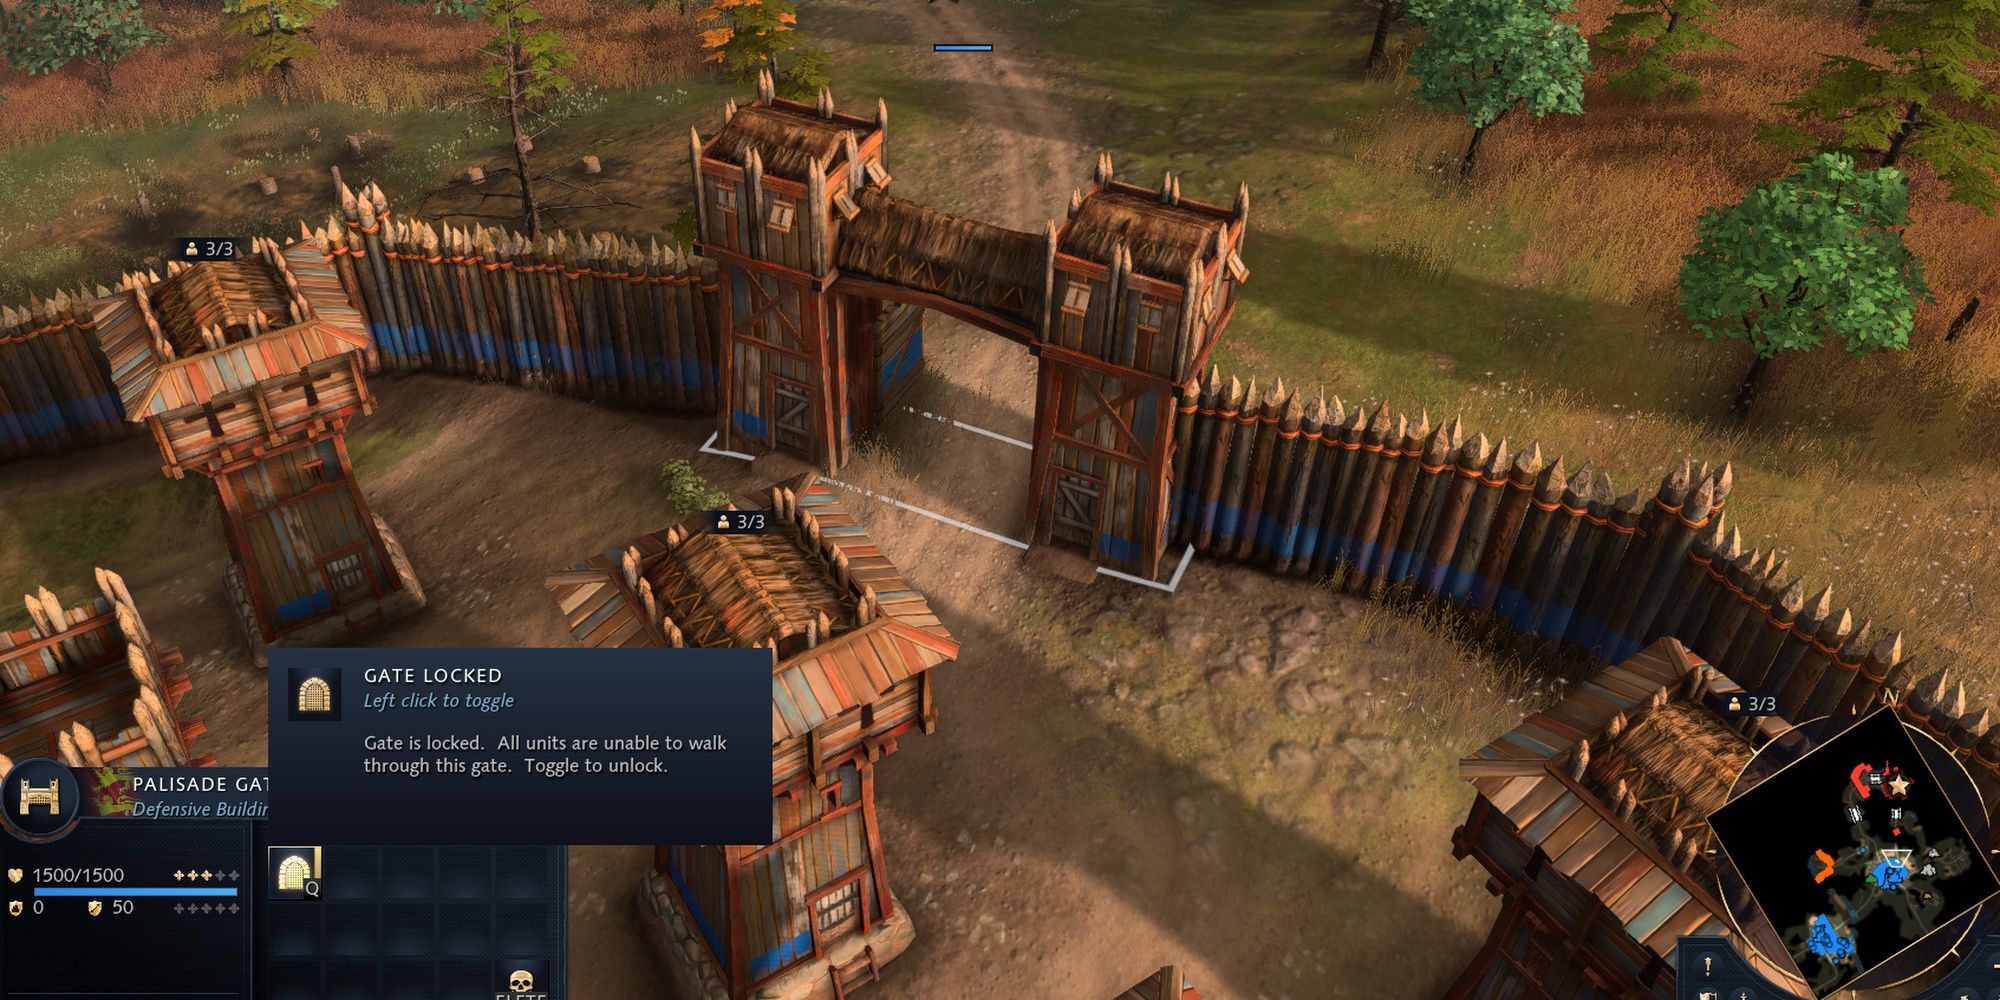 Age Of Empires IV: Gate Building Menu Indicating Locked Status